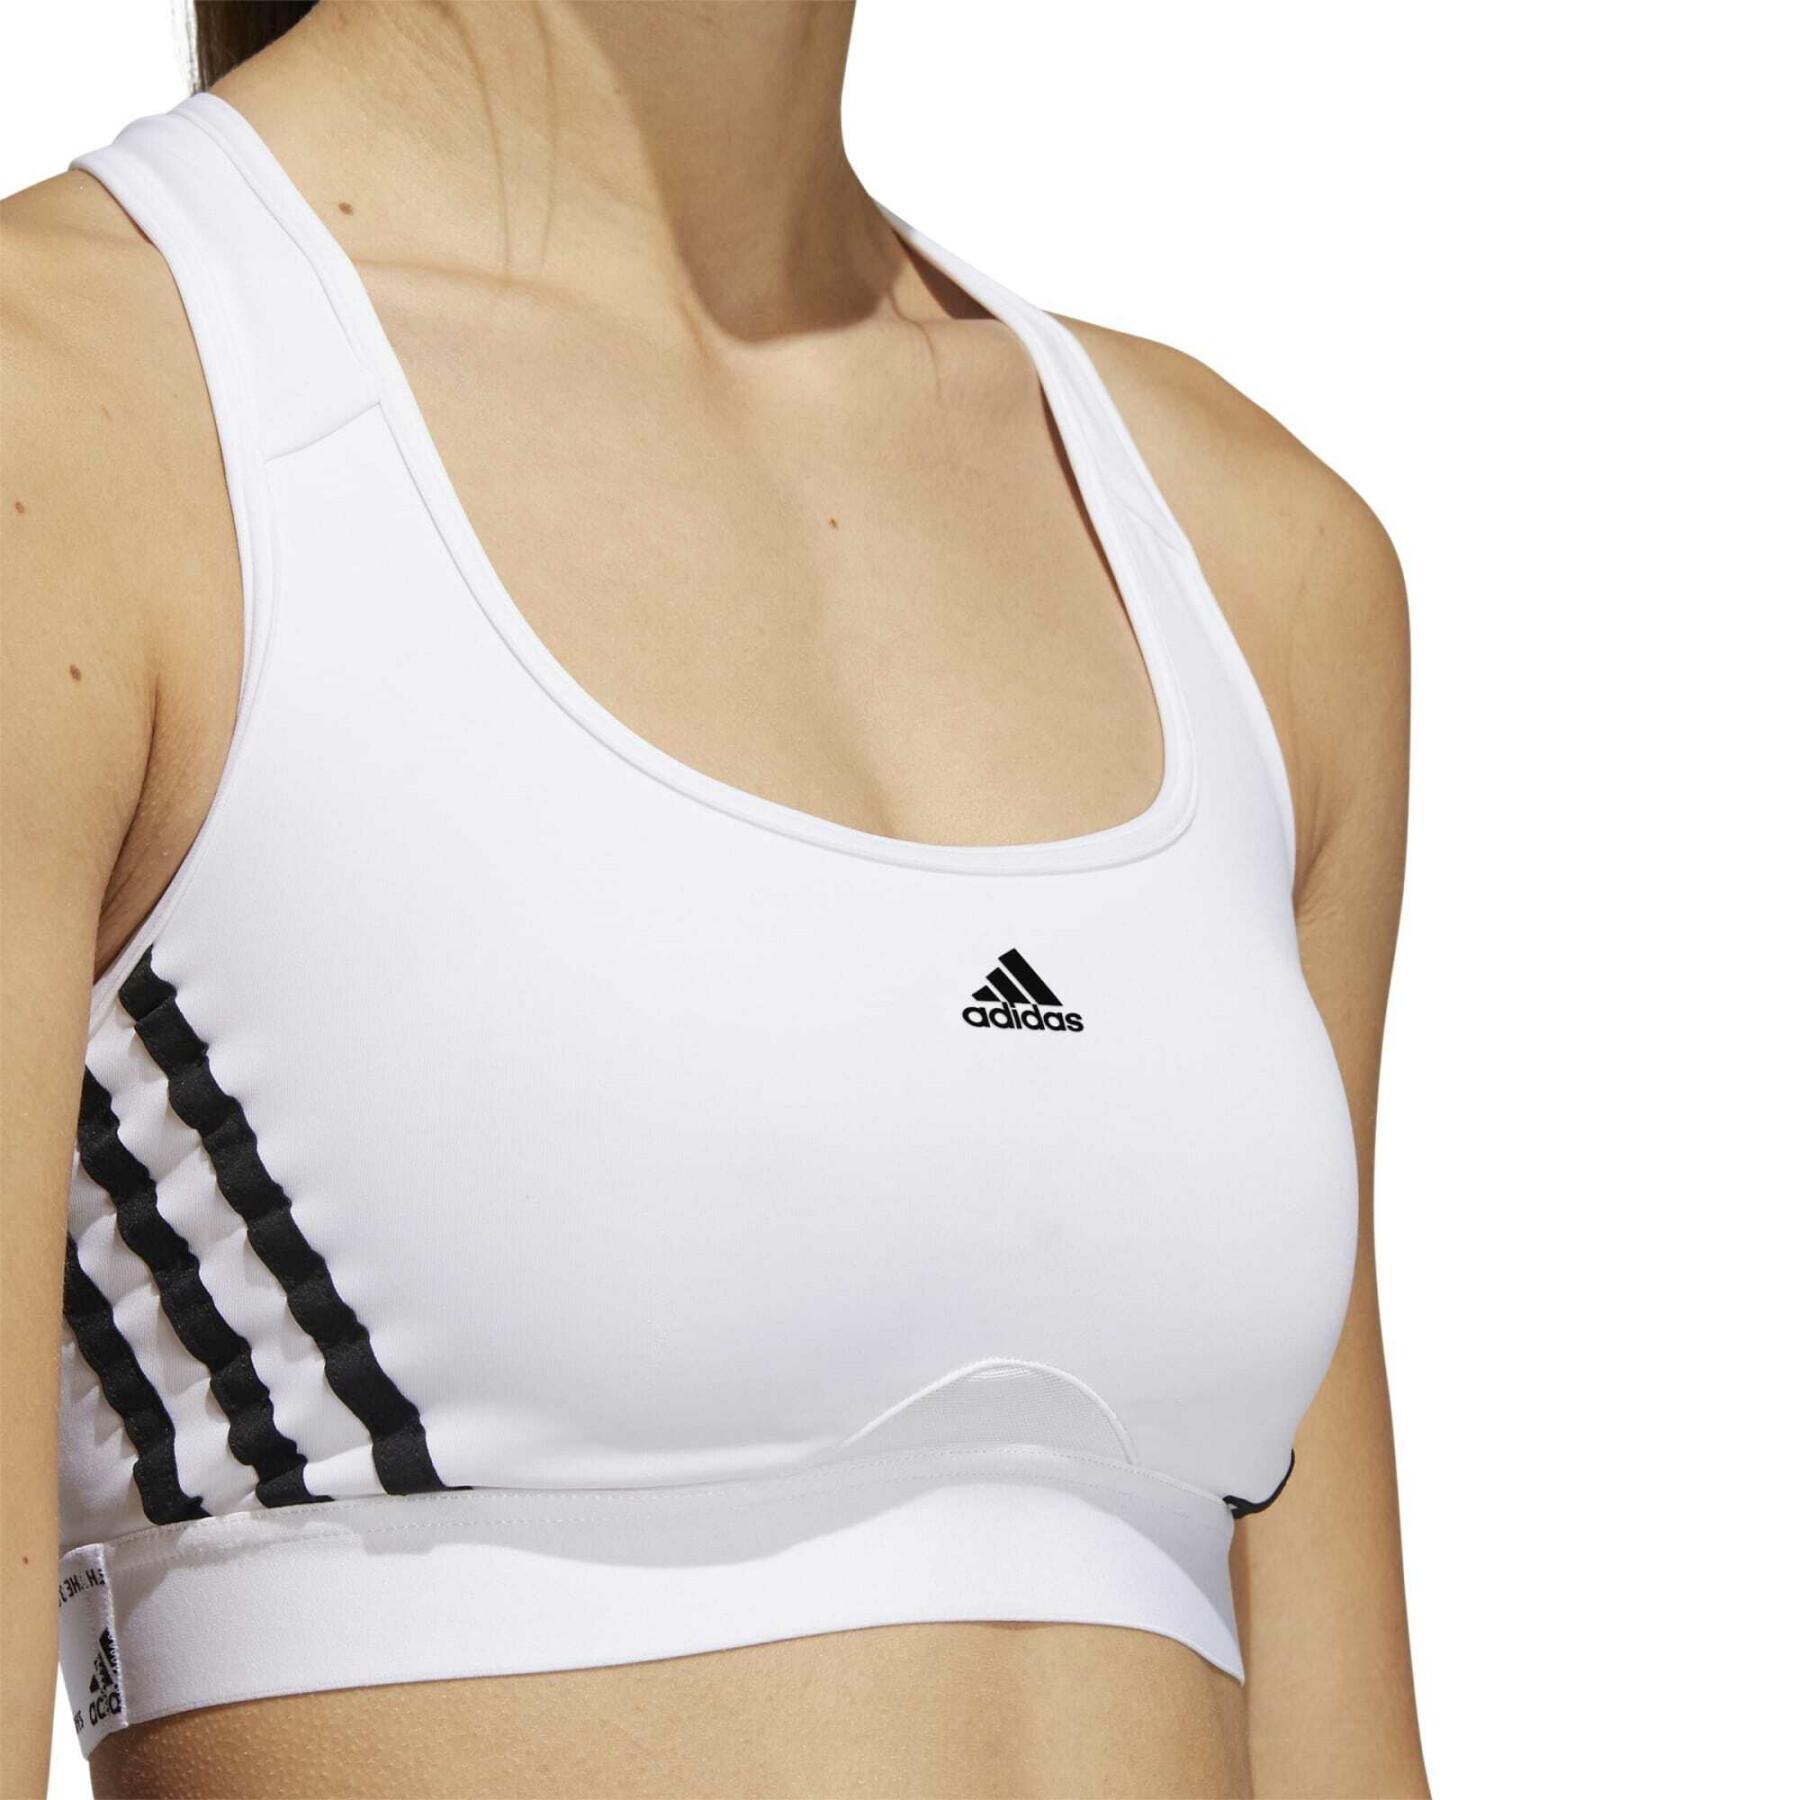 Medium support training bra for women adidas Powerreact